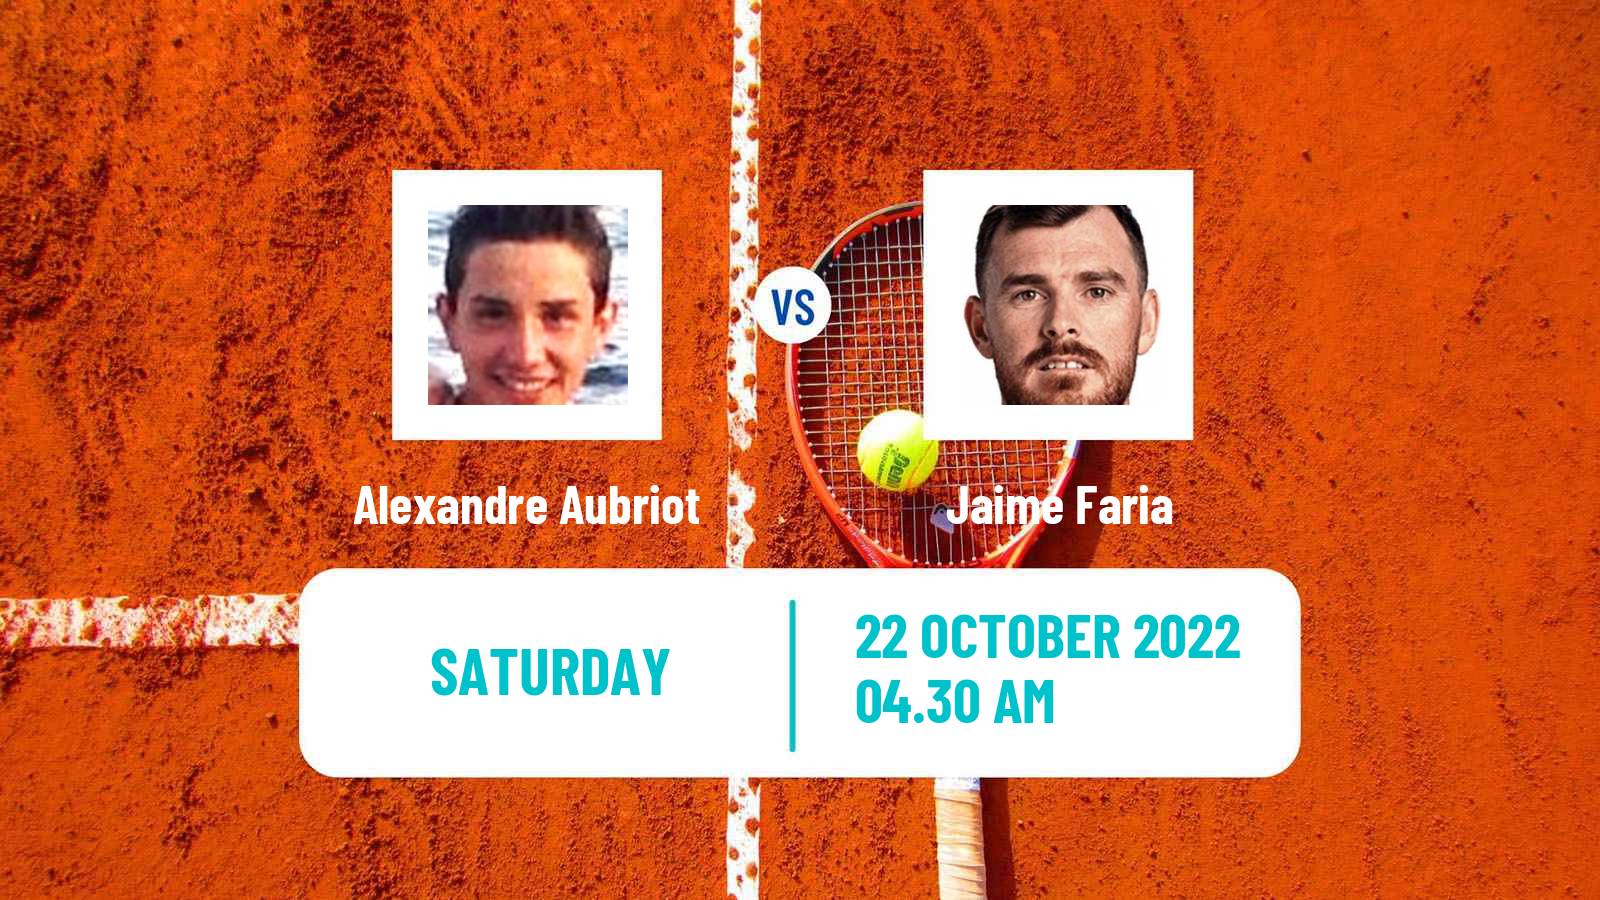 Tennis ITF Tournaments Alexandre Aubriot - Jaime Faria